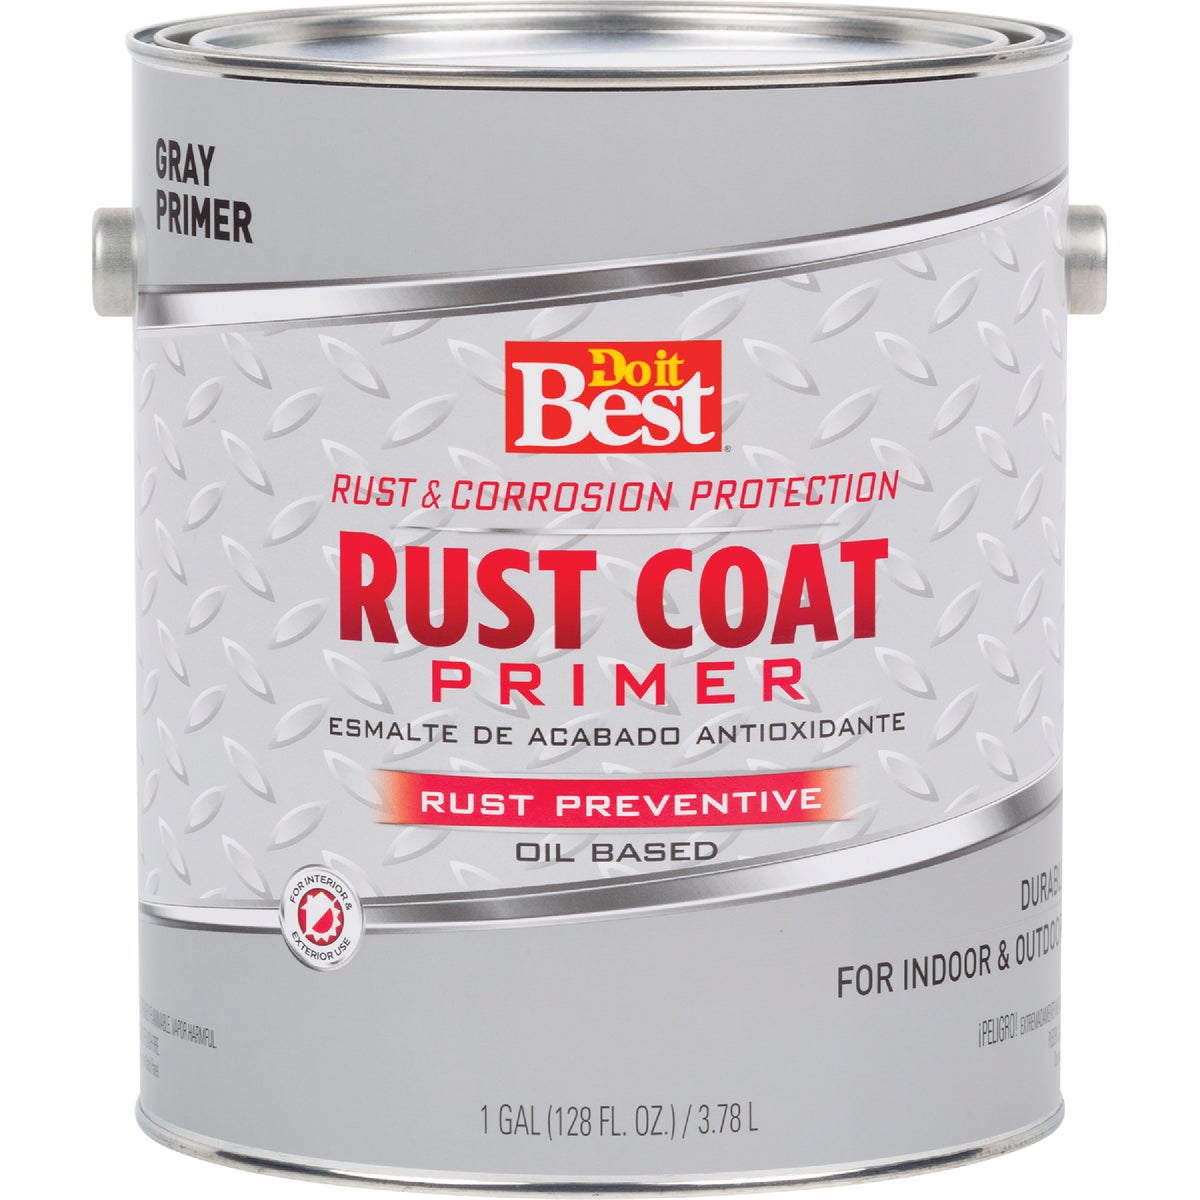 Do it Best Rust Coat Enamel Primer, Gray, 1 Gal.